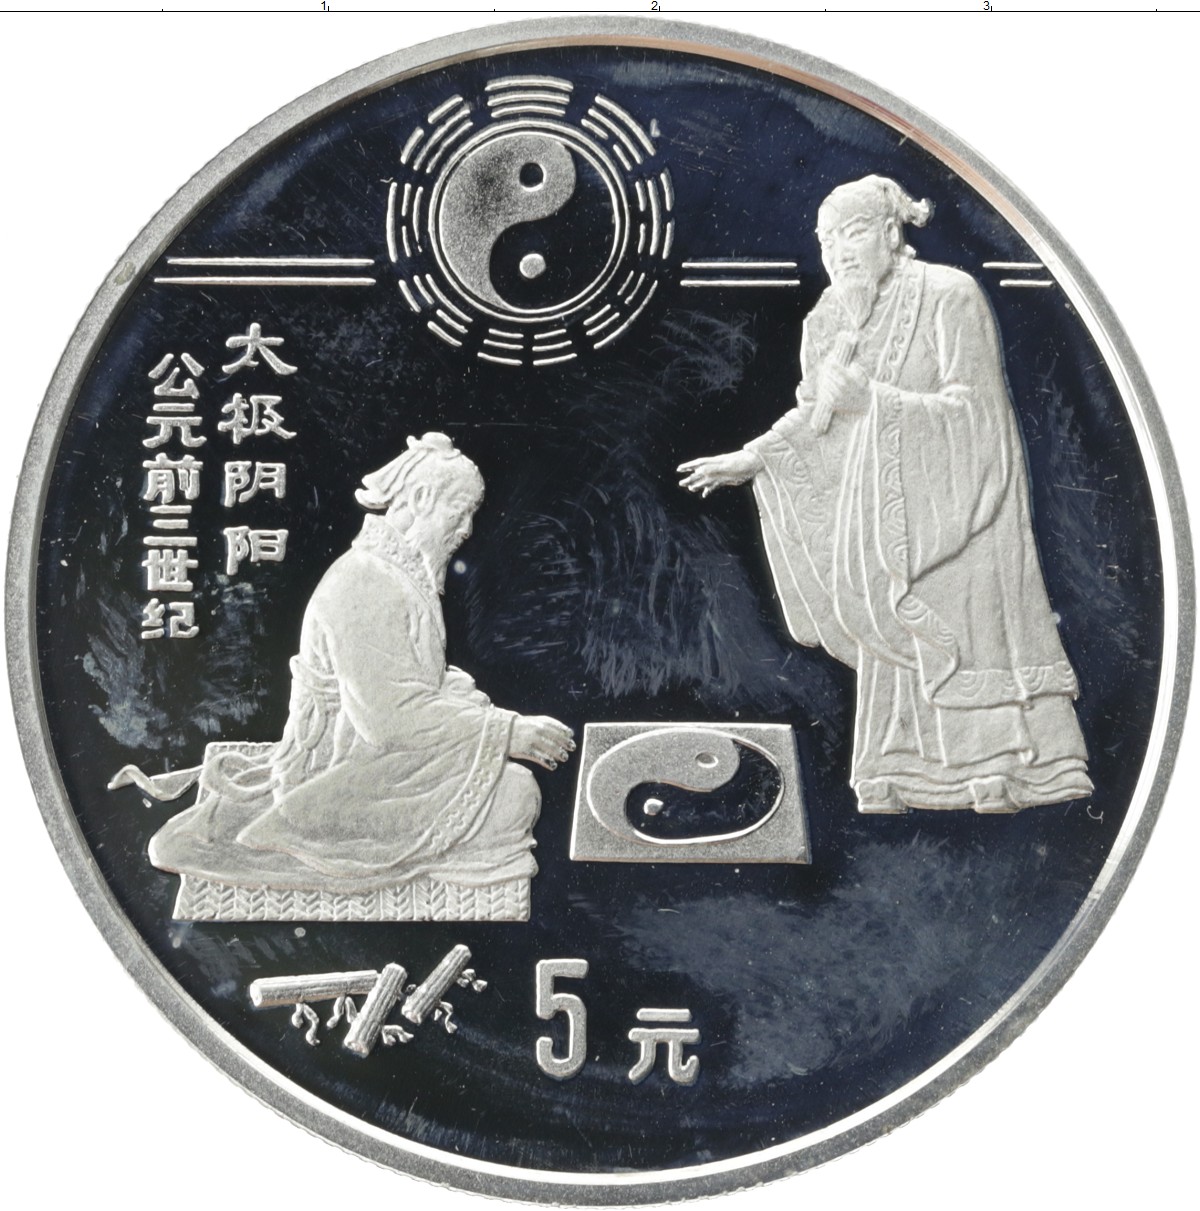 Китайский юань монеты. Монета 2000 юаней 1993. 5 Китайских юаней. 5 Юаней монета. Валюта Китая монеты.